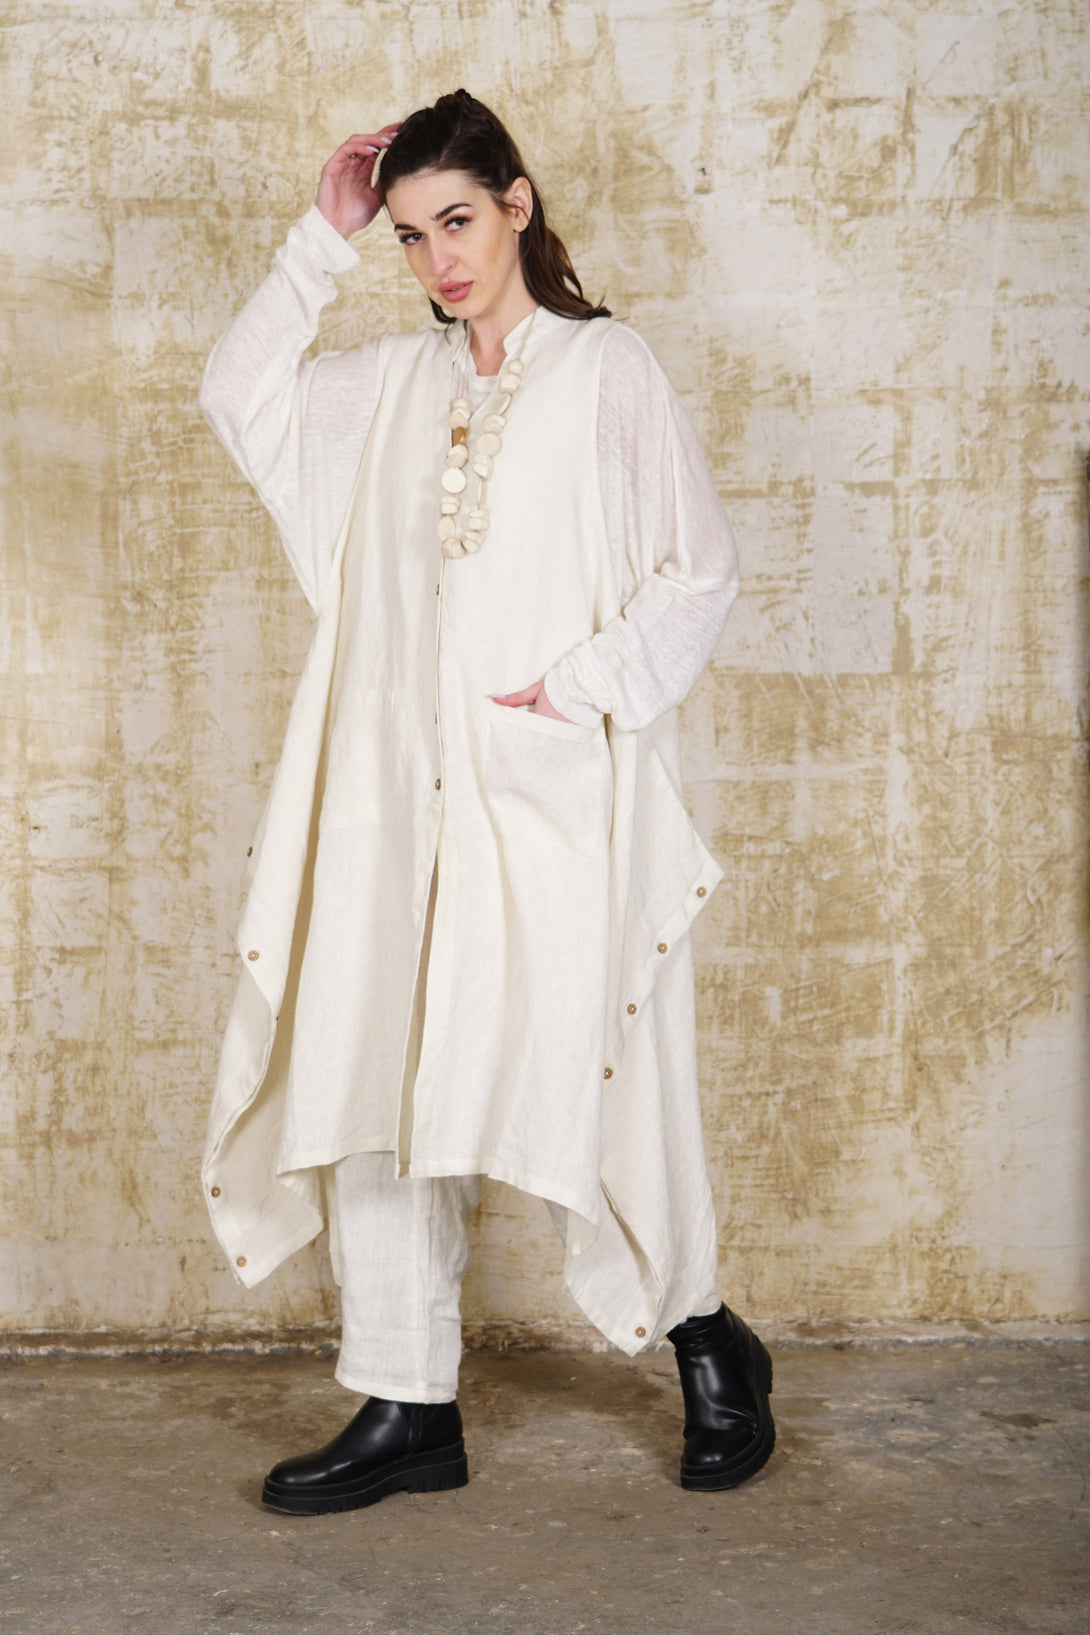 Quintella Jacket in Cream - Imagine Fashion